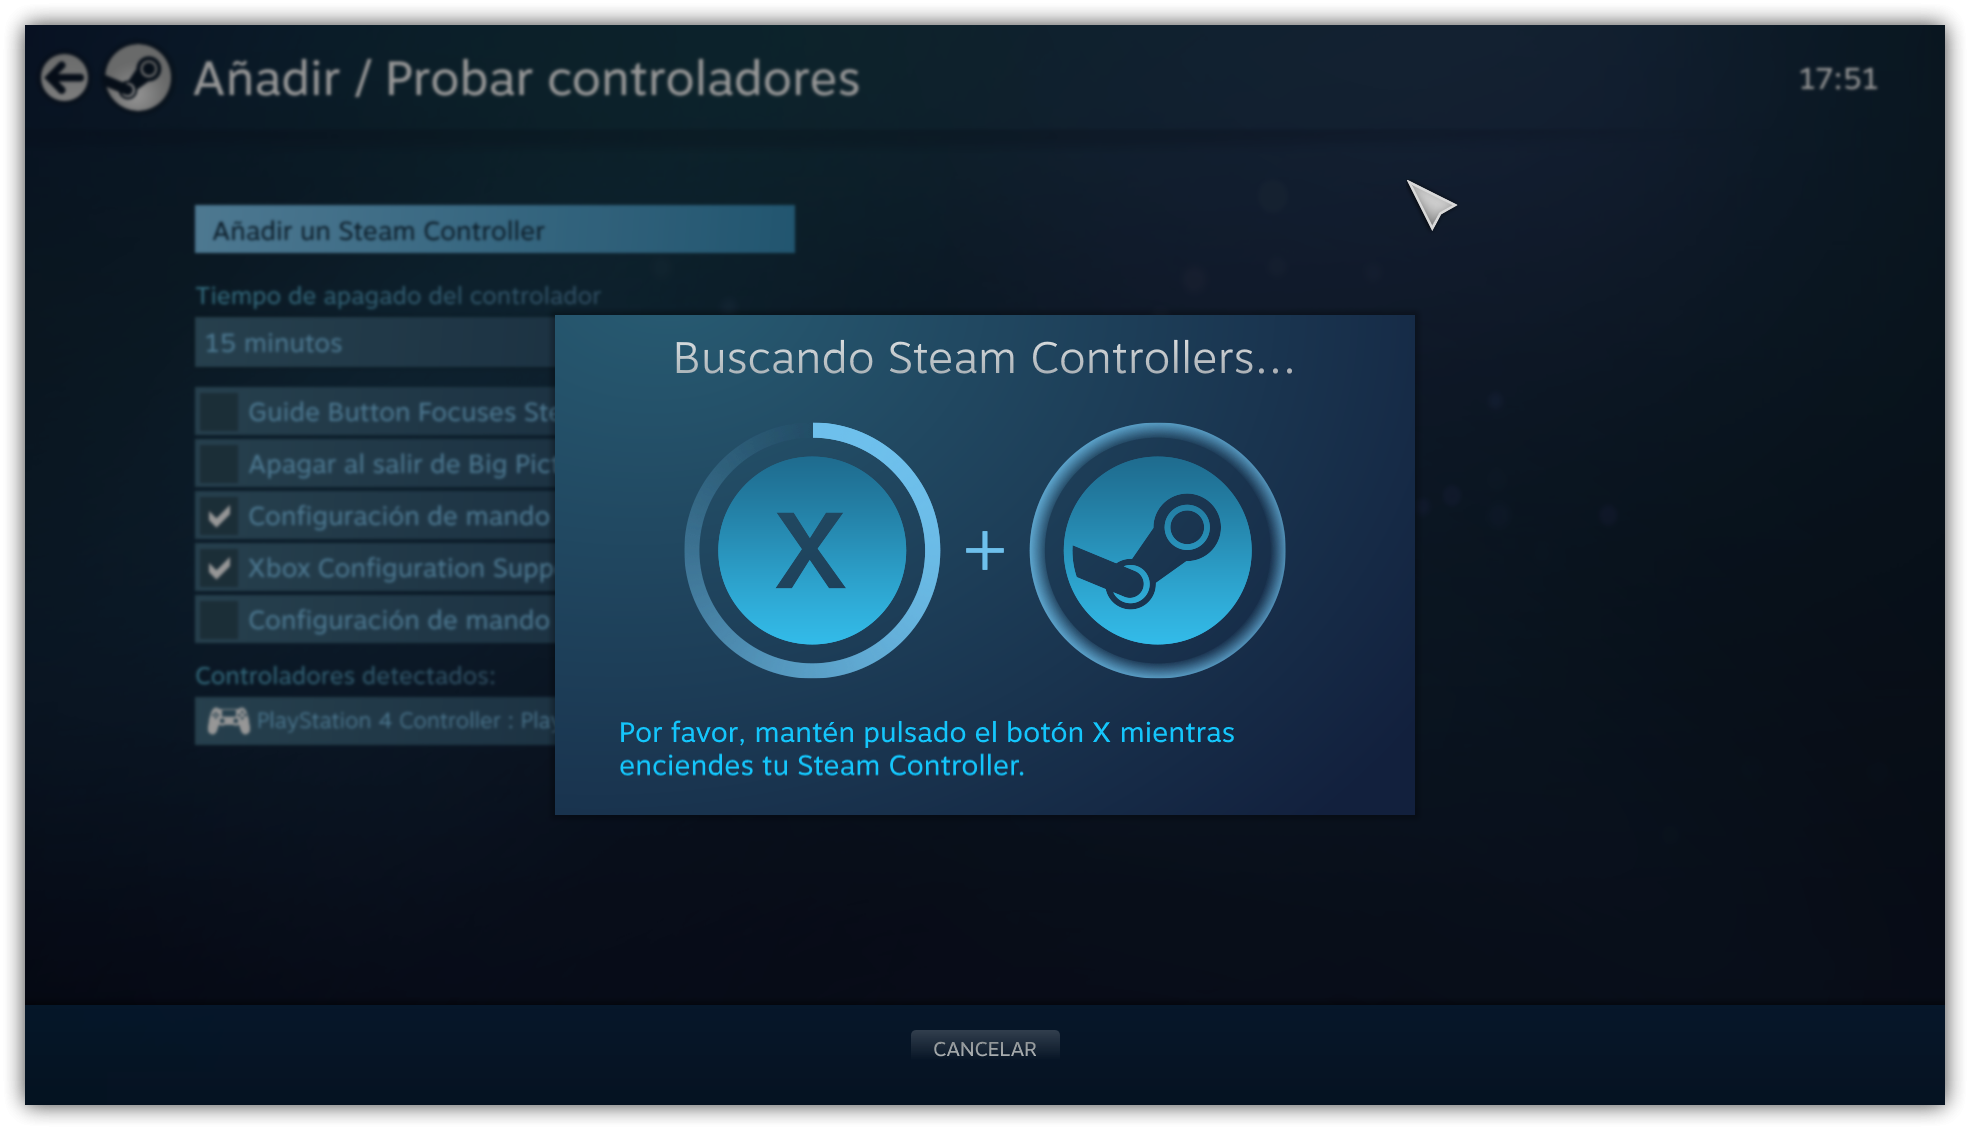 ps4 controller as steam controller software